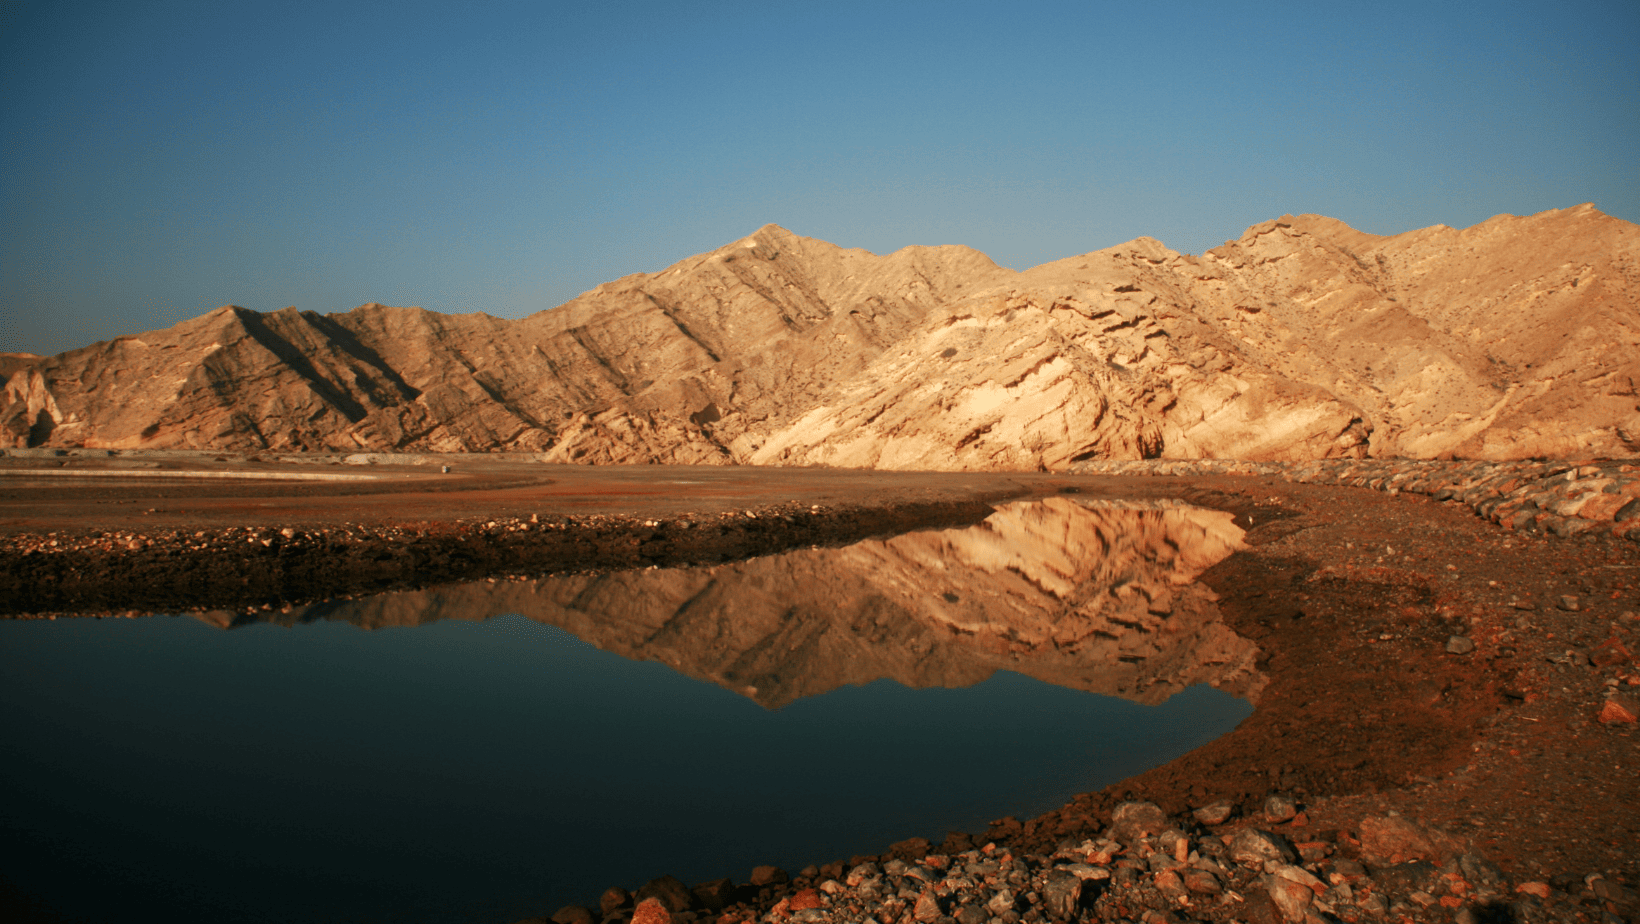 Reflection of hills on water in Yiti Beach, Oman